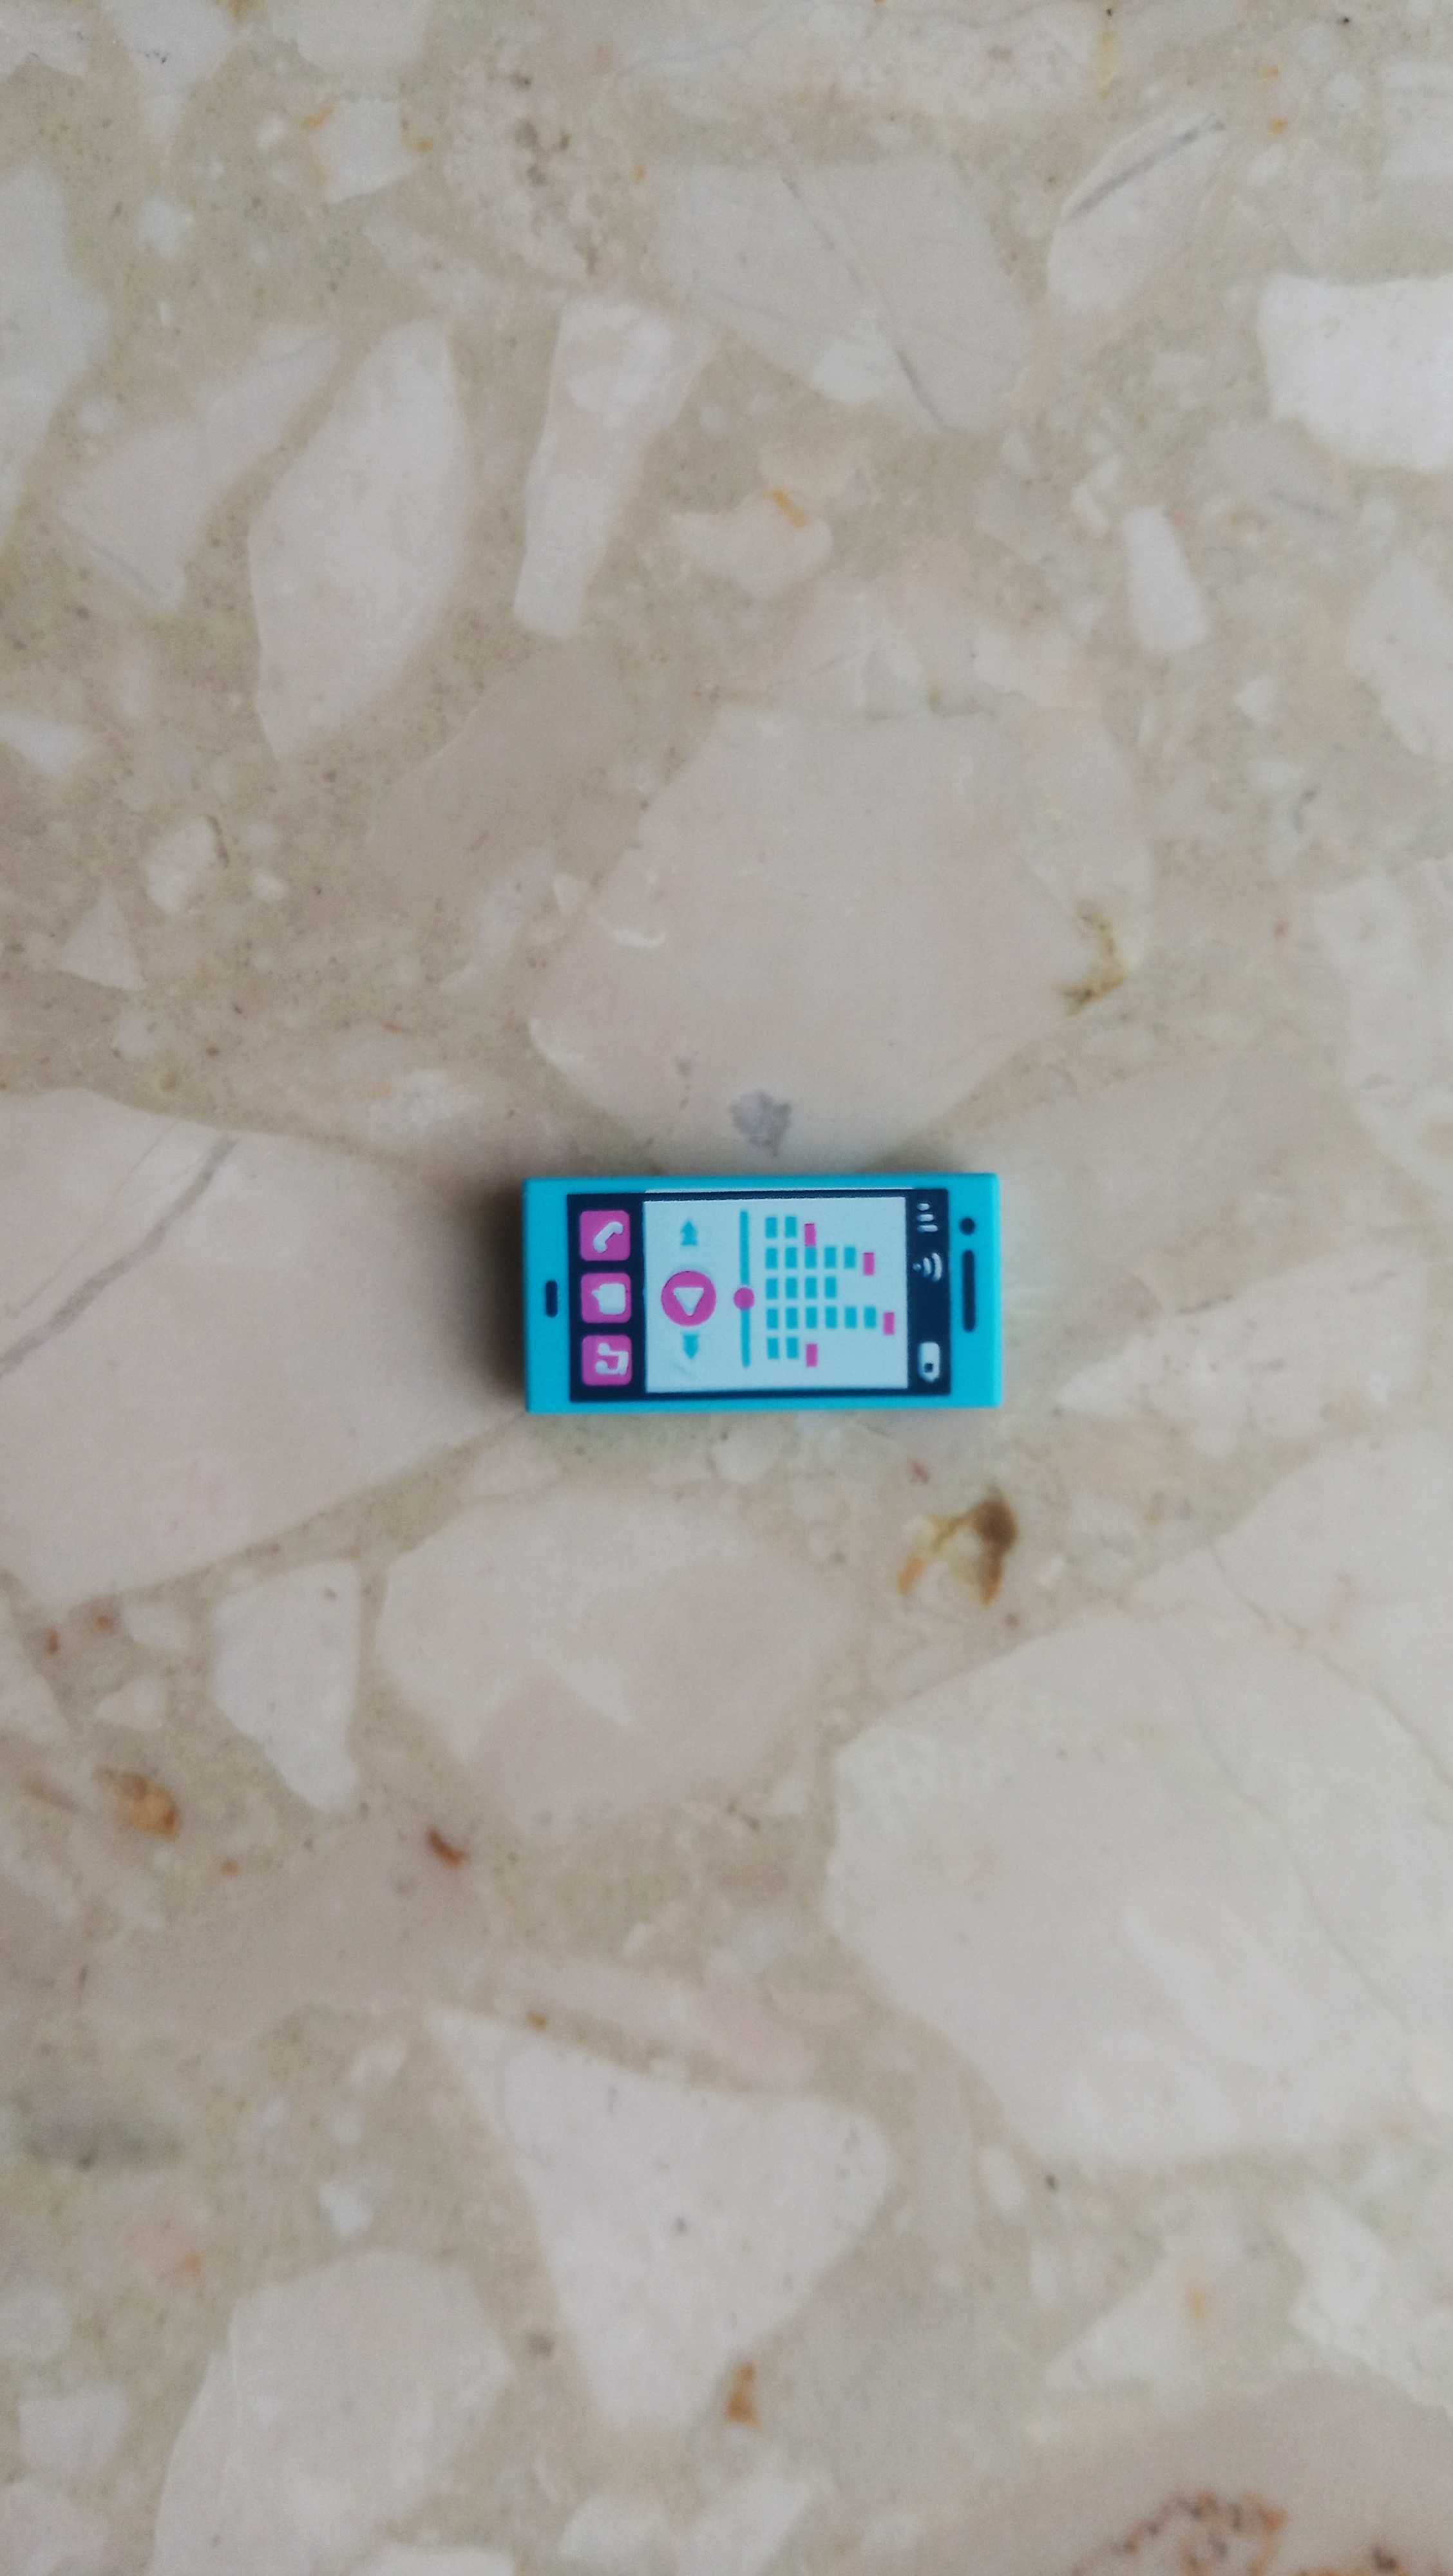 Lego 3069bpb0854 telefon, smartfon medium azure